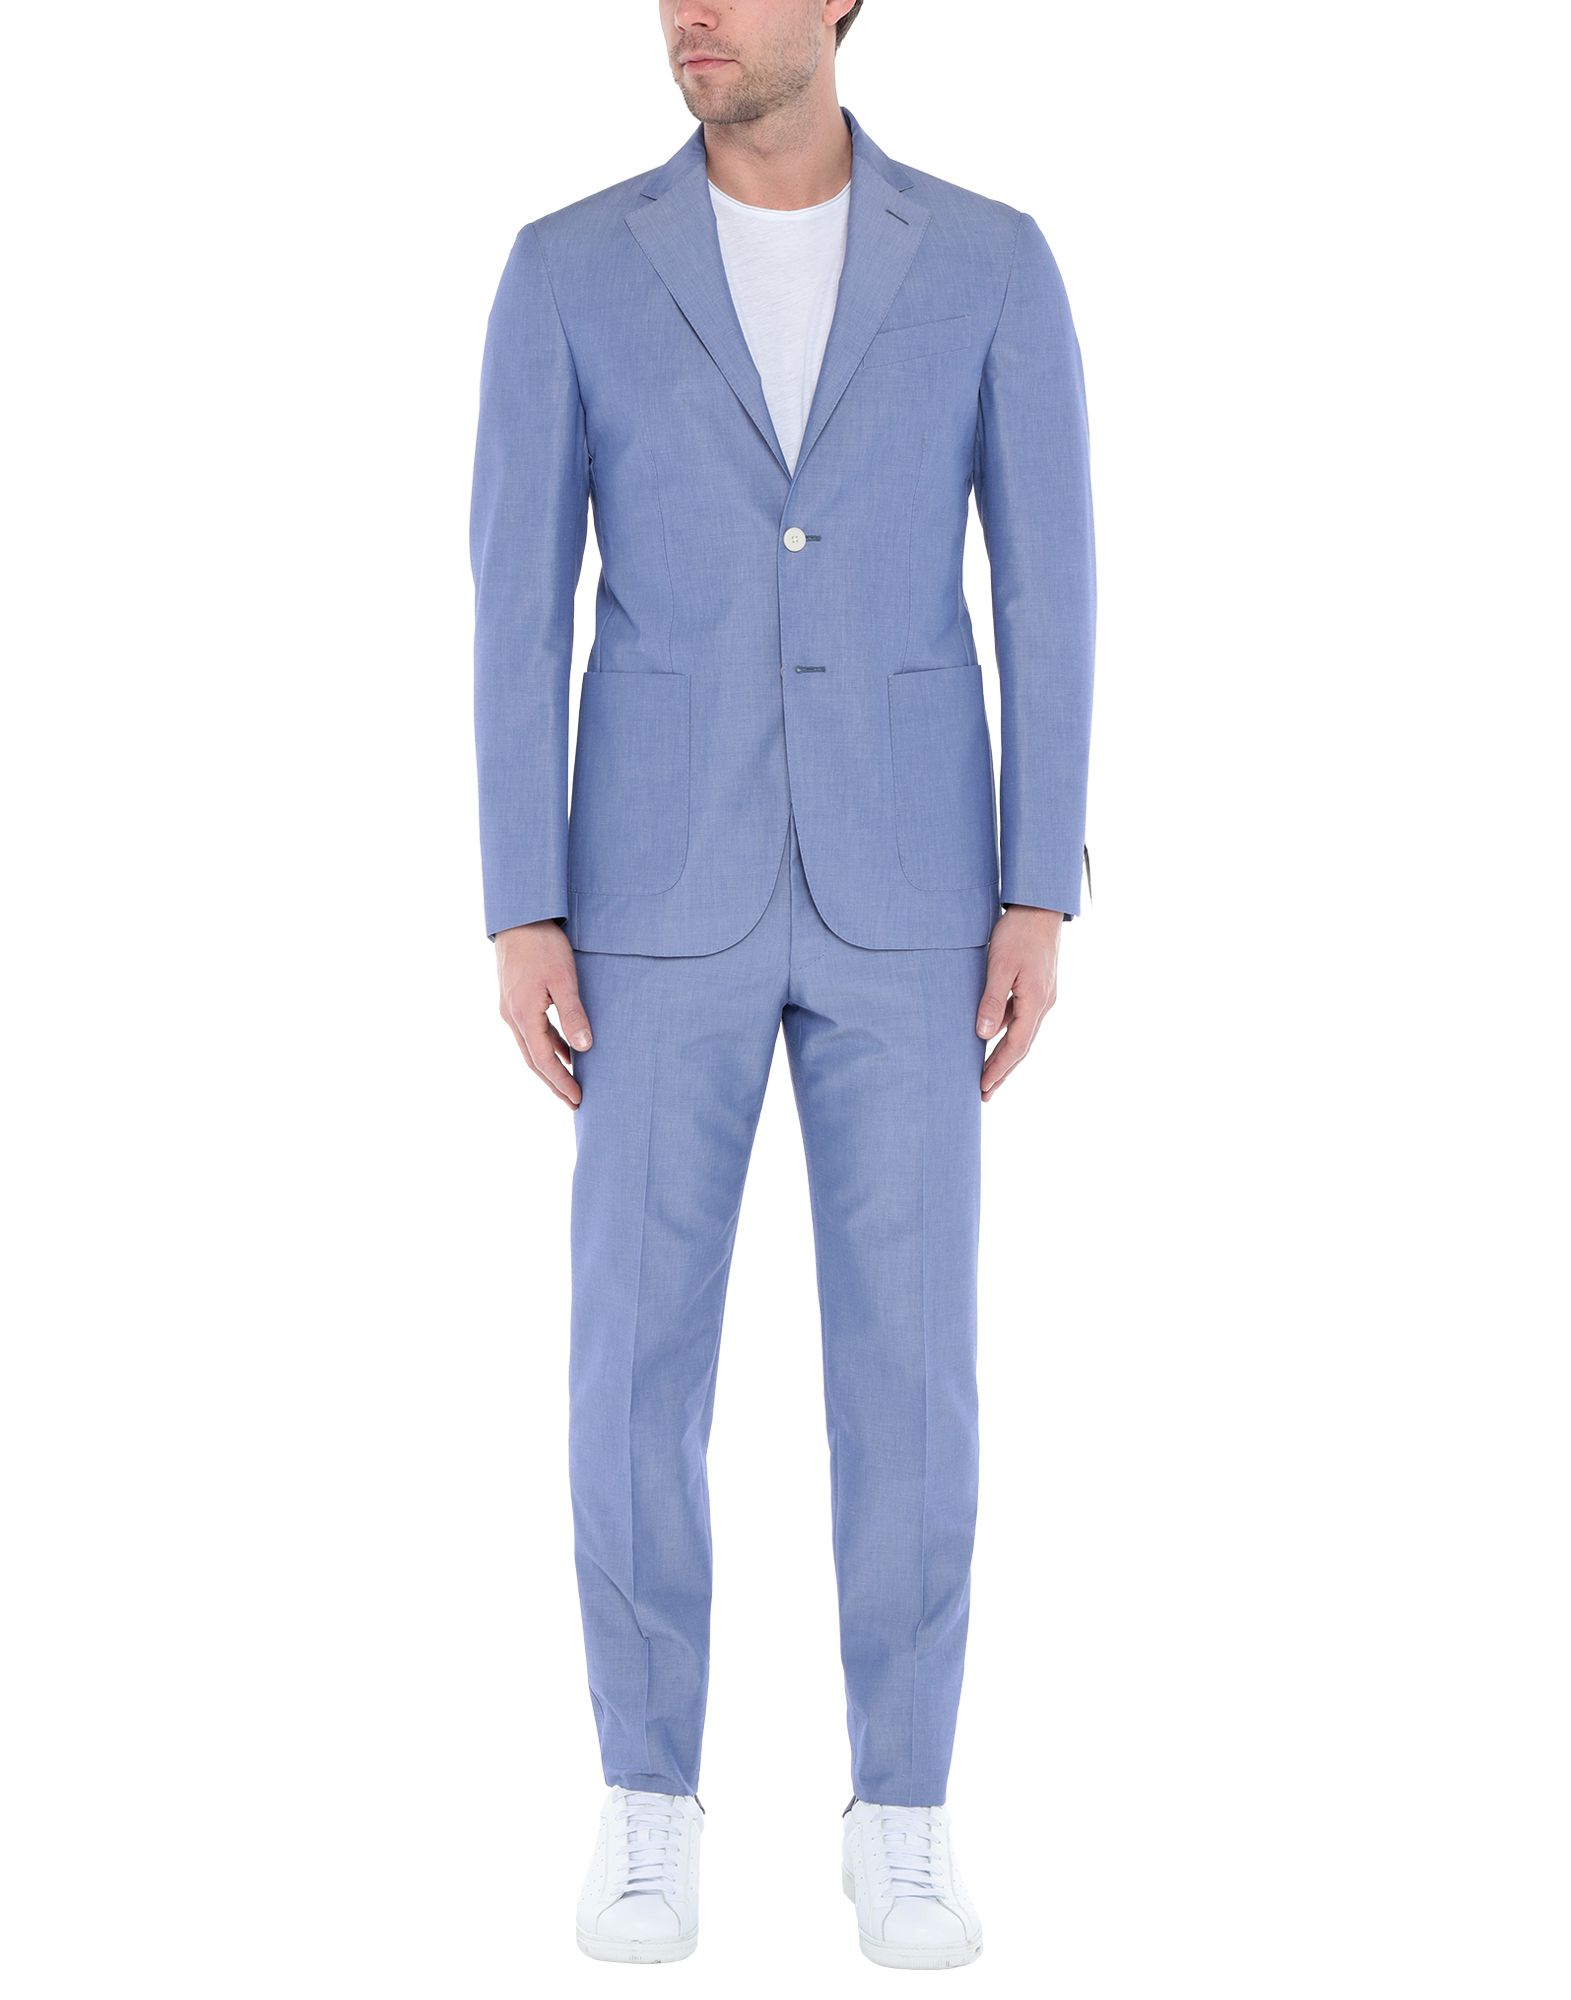 Cc Collection Corneliani Suits In Pastel Blue | ModeSens